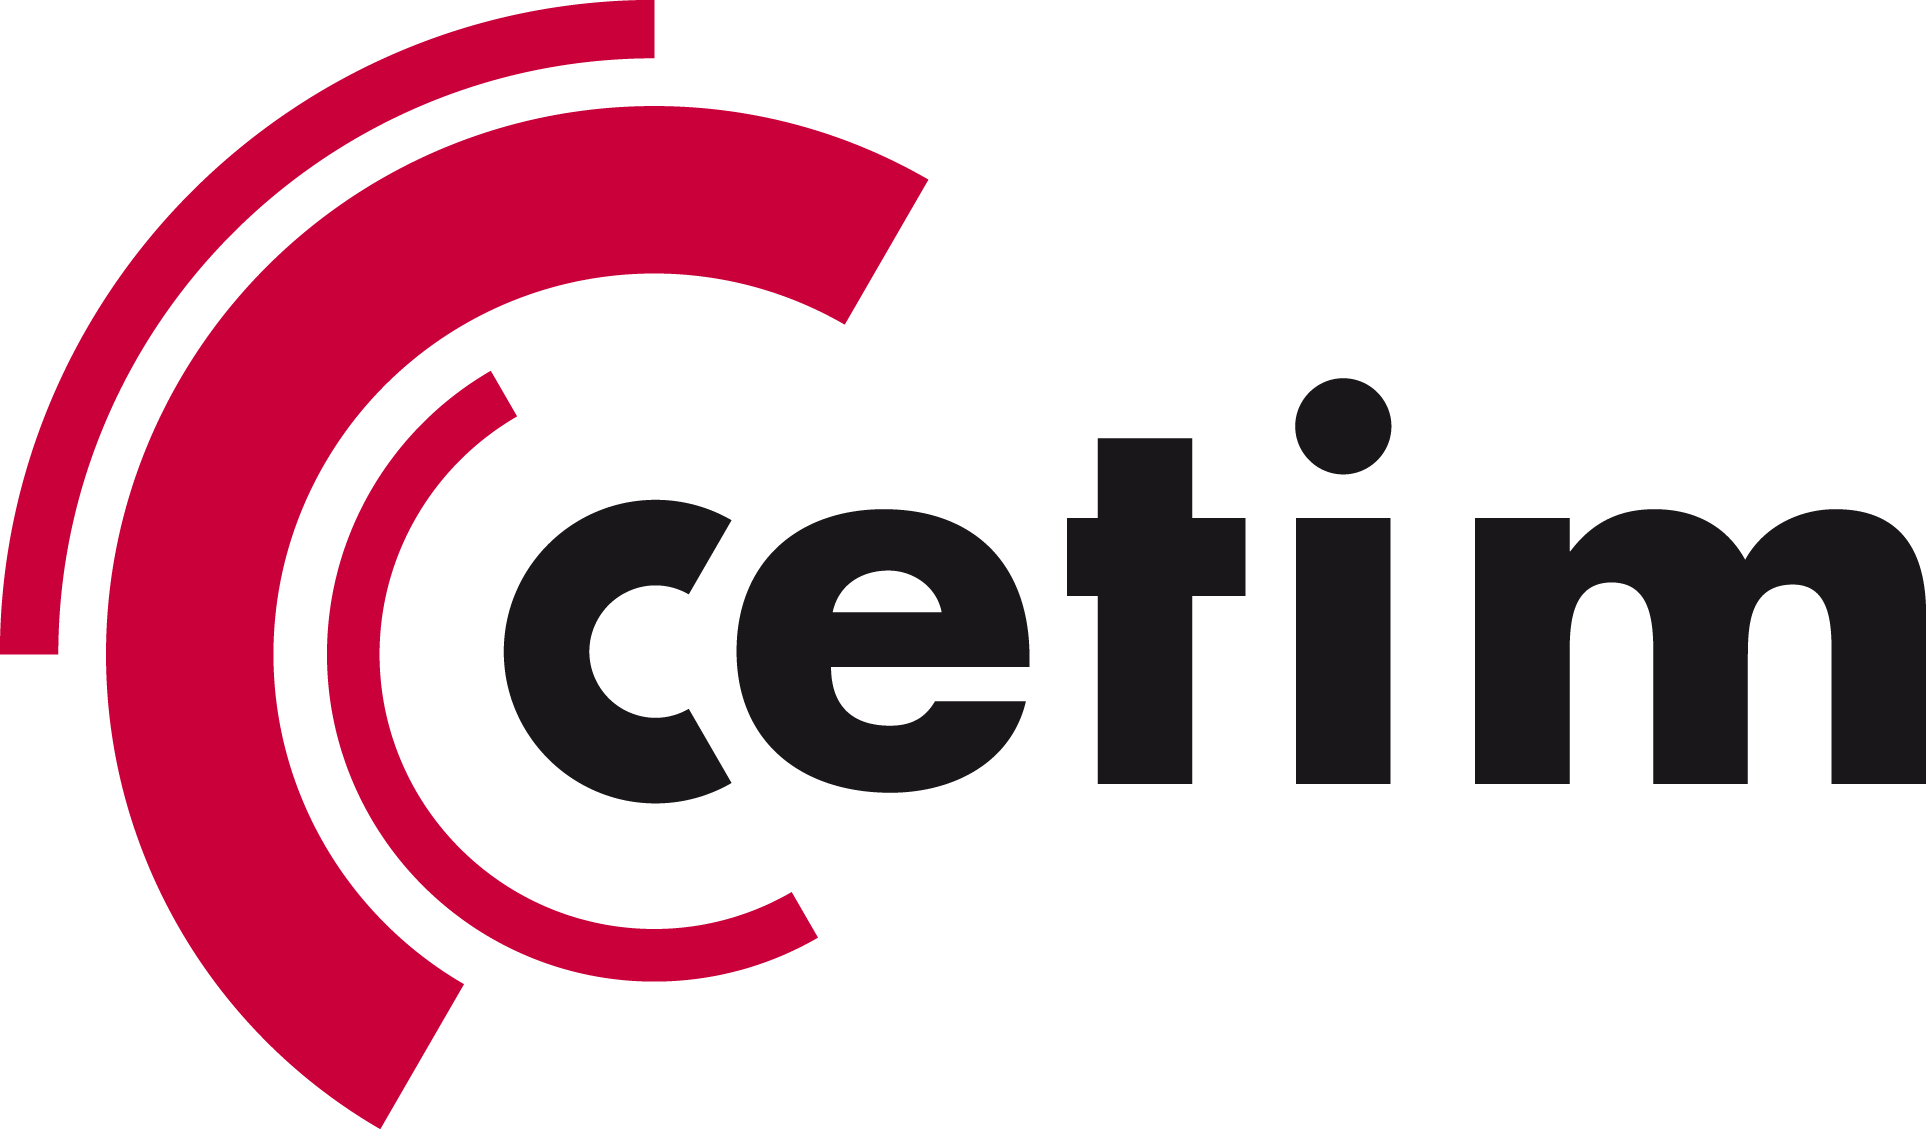 Cetim logo